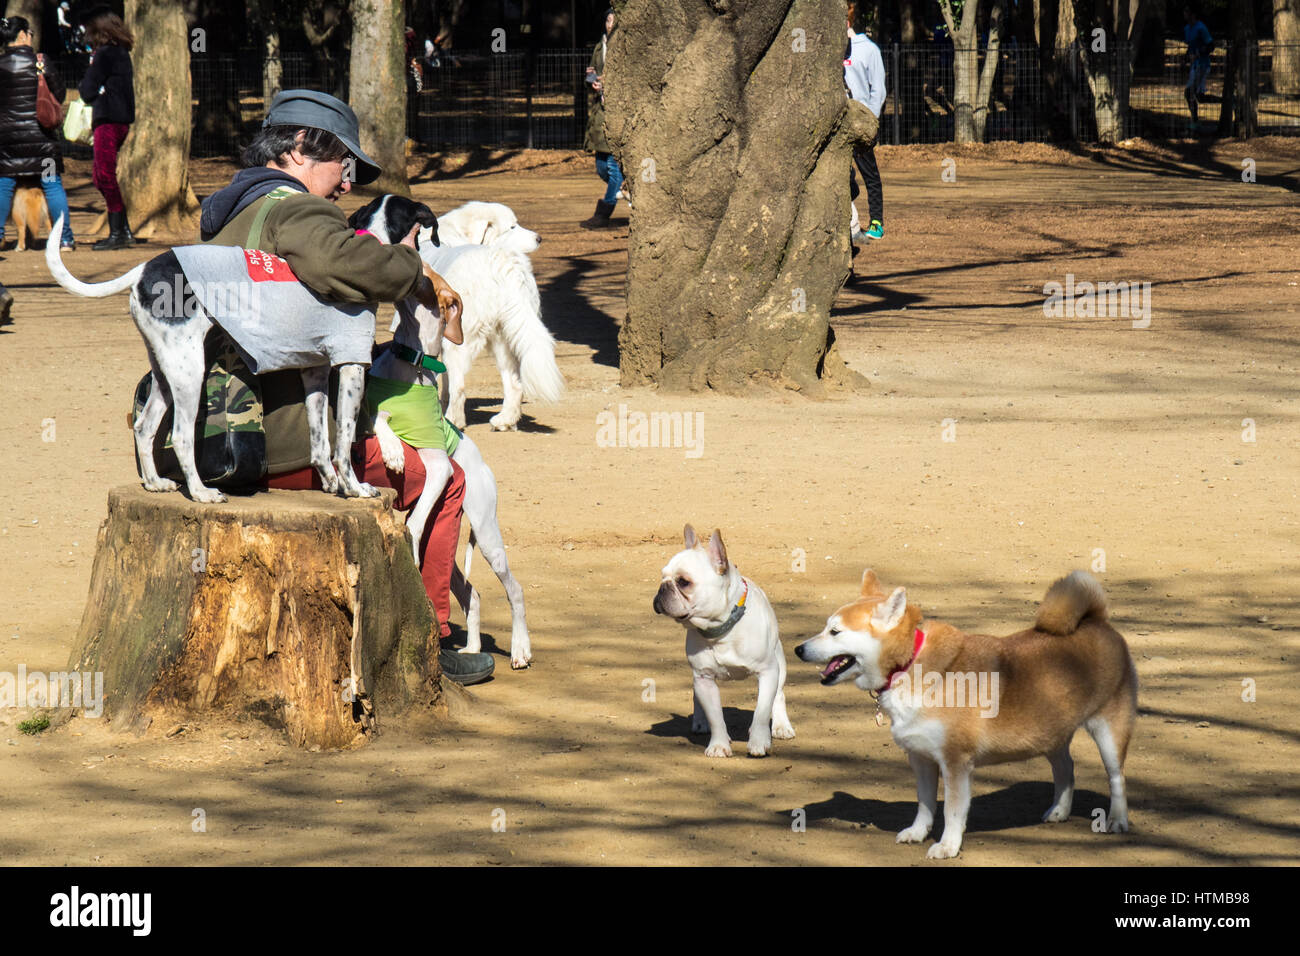 A Japanese man sitting on a tree stump patting two dogs in a dog exercise park Yoyogi Park, Shibuya Tokyo Japan. Stock Photo